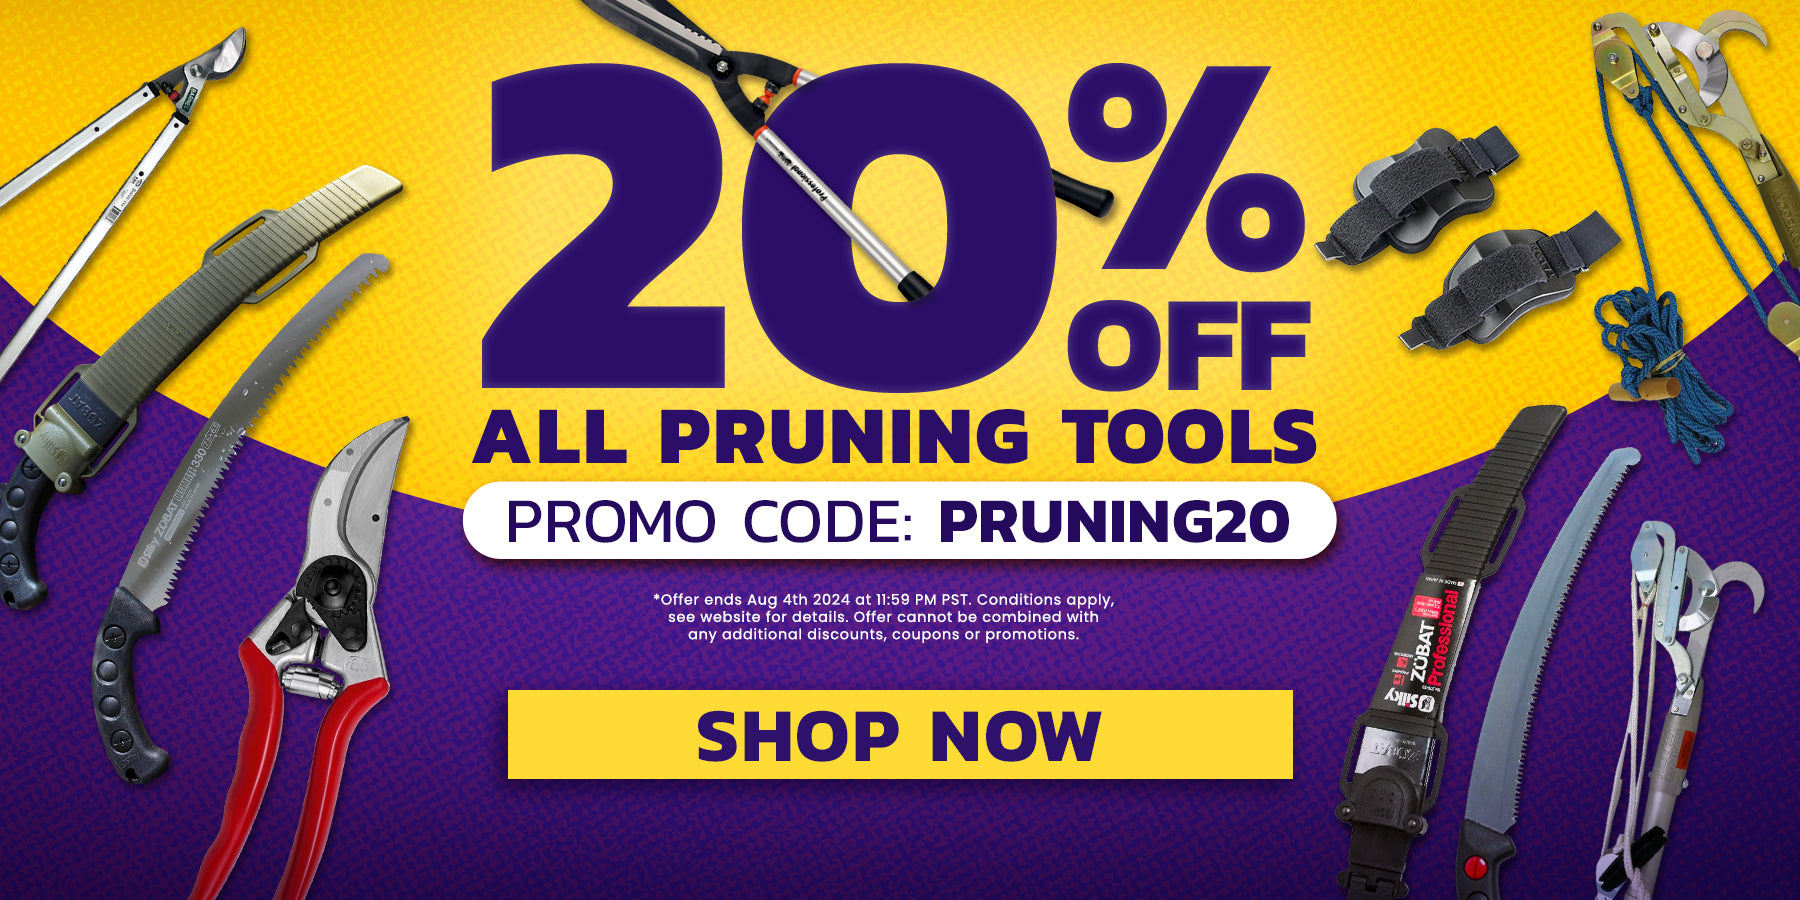 Tas 20  off pruning tools desktop banner